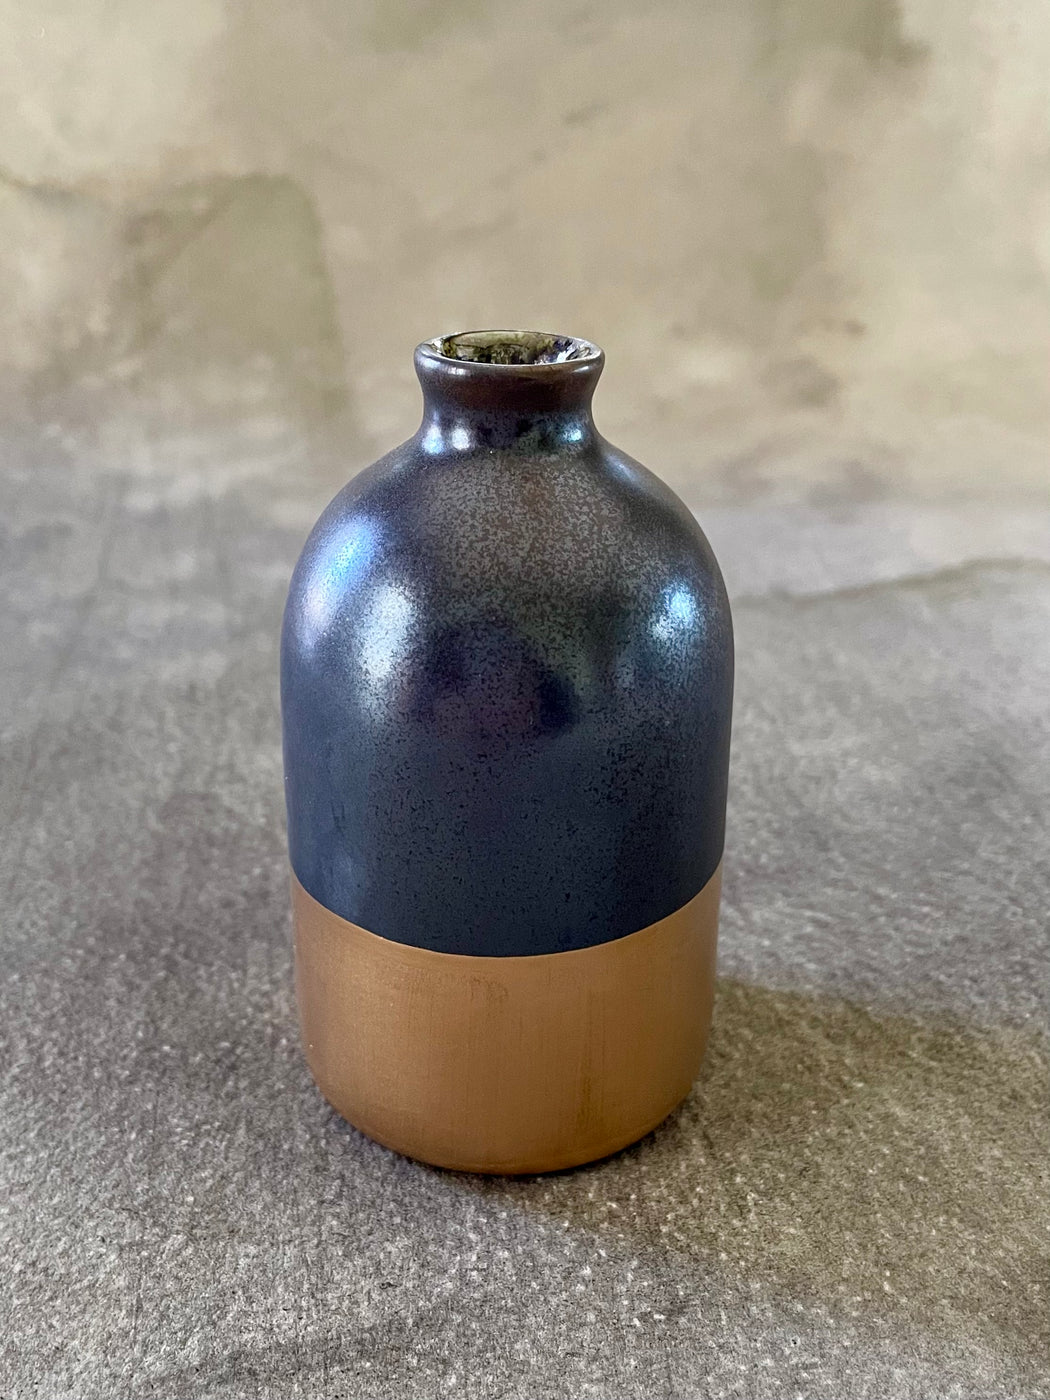 "Minimalist" Bud Vase by Honeycomb Studio - Black with Gold